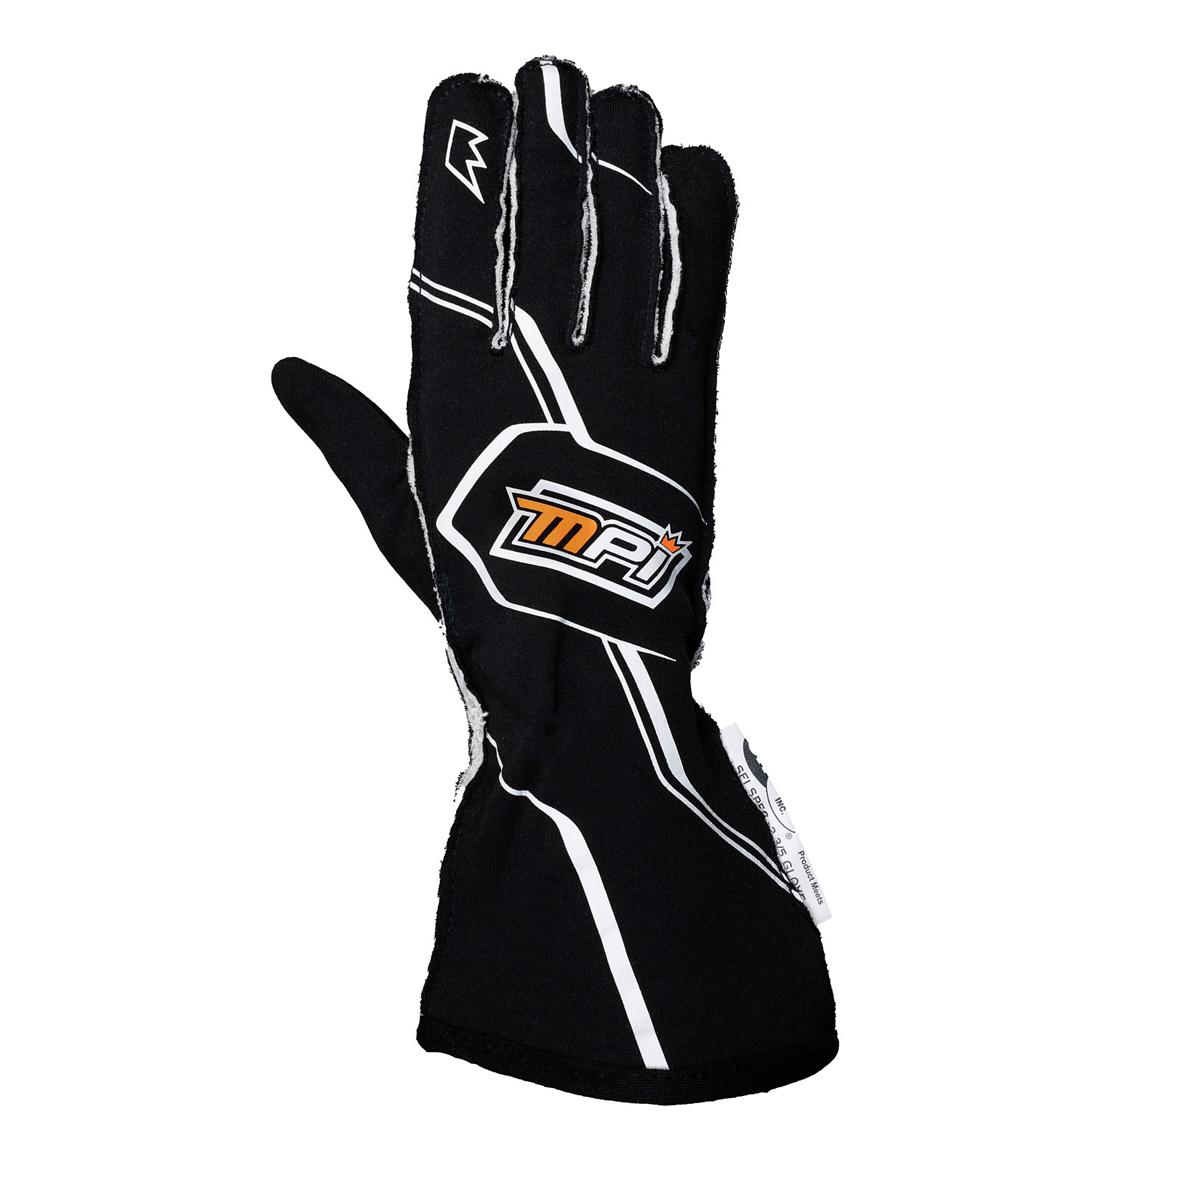 MPI USA MPI-GL-B-XL Driving Gloves, SFI 3.3/5, Double Layer, Nomex, Padded Palm, Black / White, X-Large, Pair